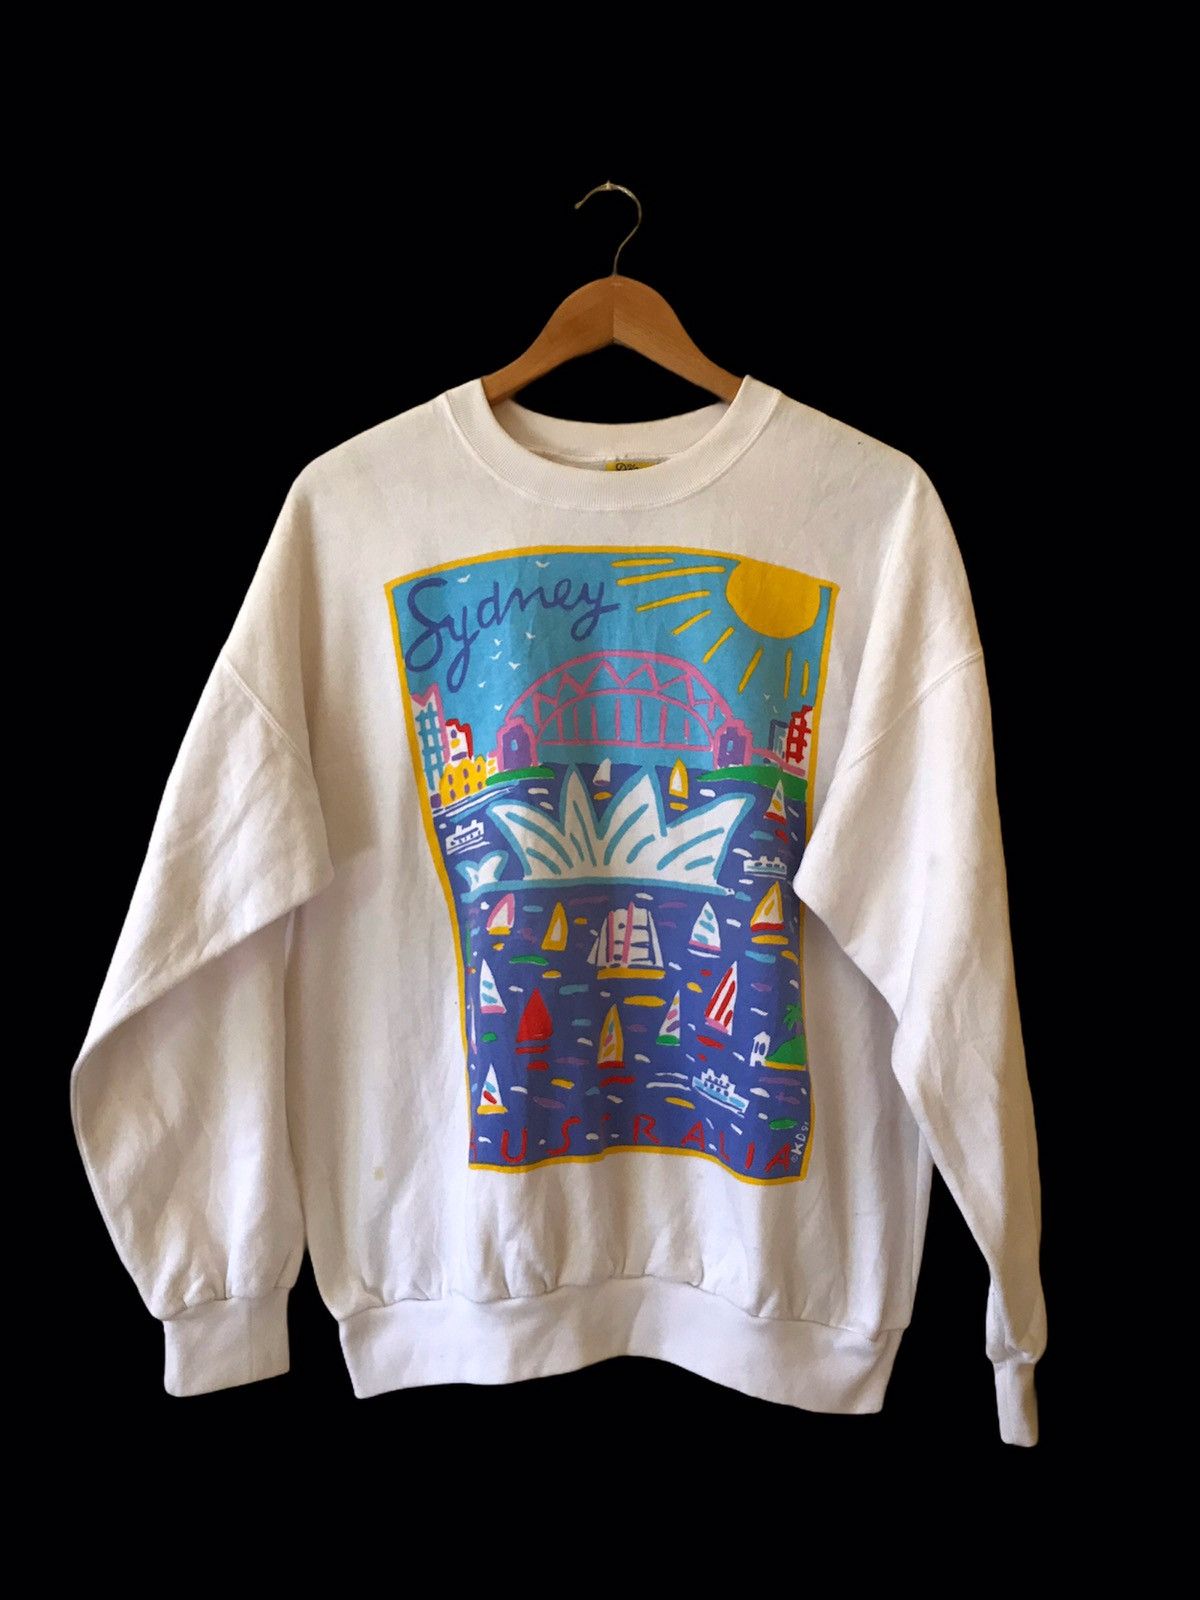 Vintage Vintage Ken Don Art and Design 1991 Sweatshirt Size US M / EU 48-50 / 2 - 1 Preview